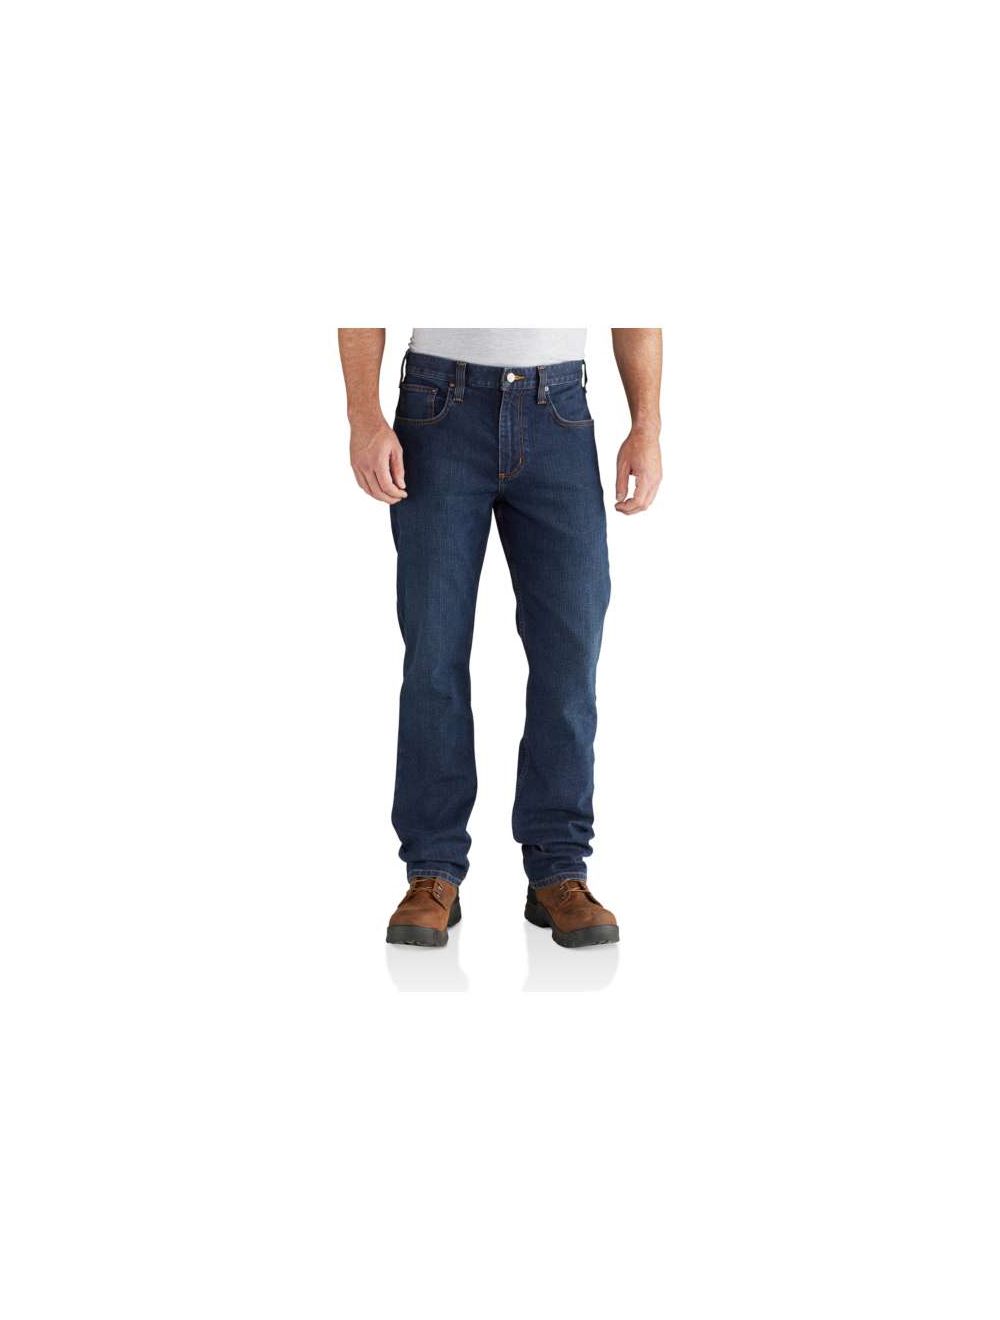 Carhartt 102804 Rugged Flex® Relaxed Fit Jeans - Straight Leg